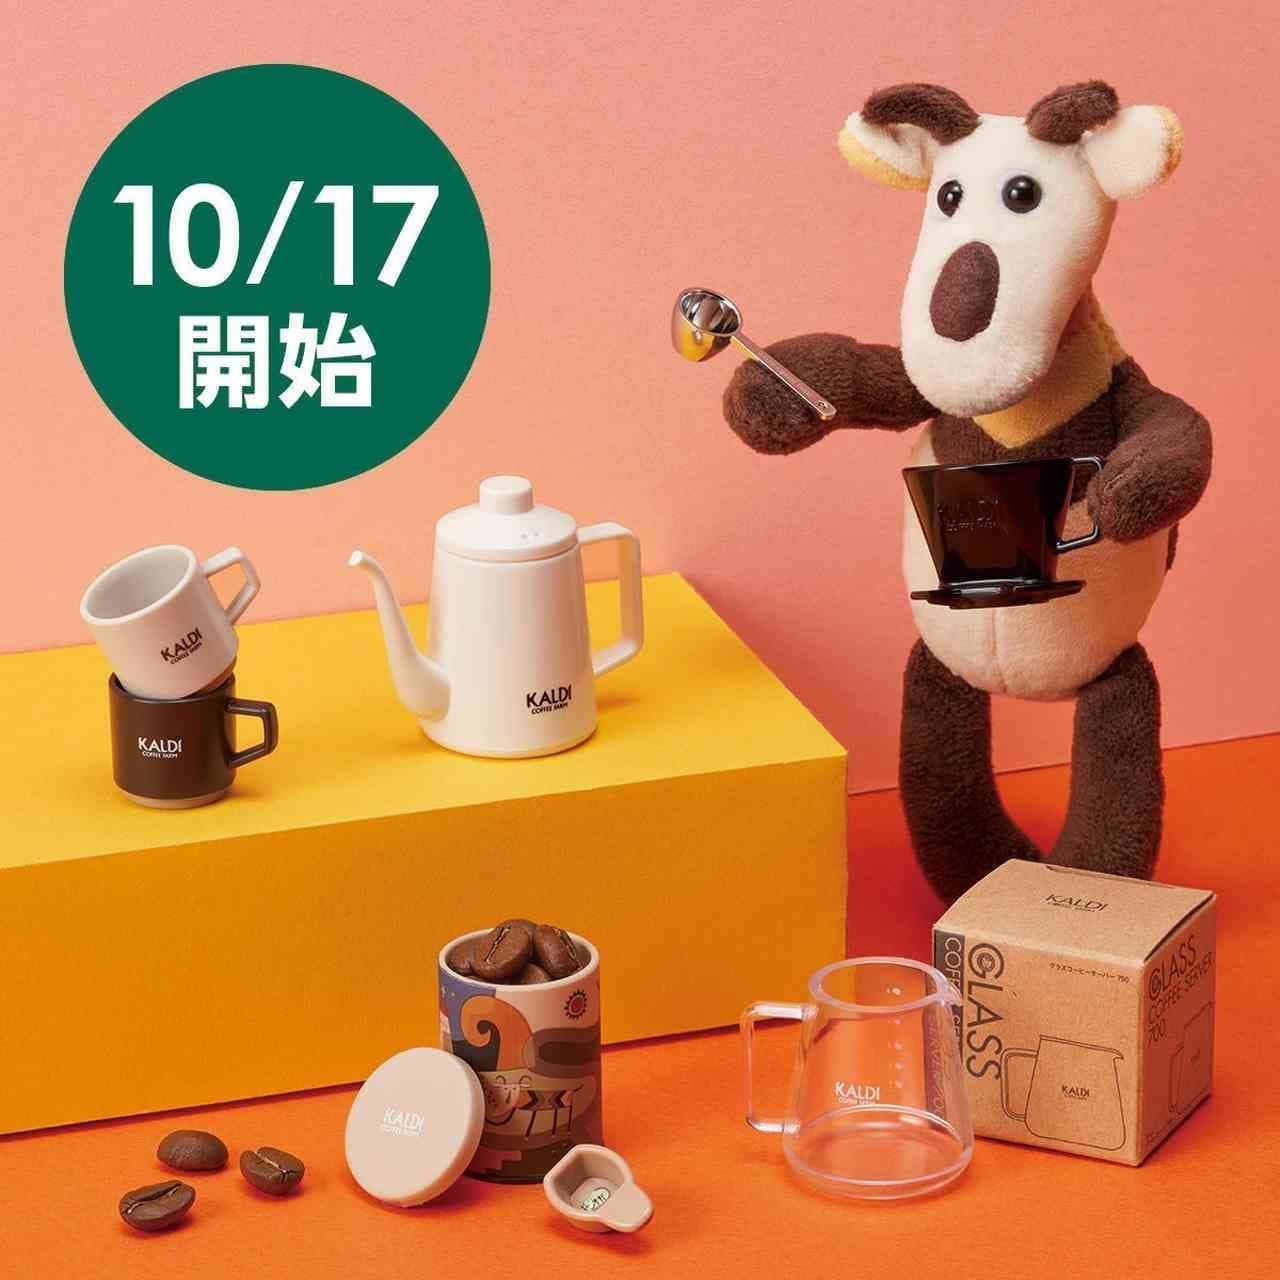 KALDI "Coffee Goods Miniature Figures